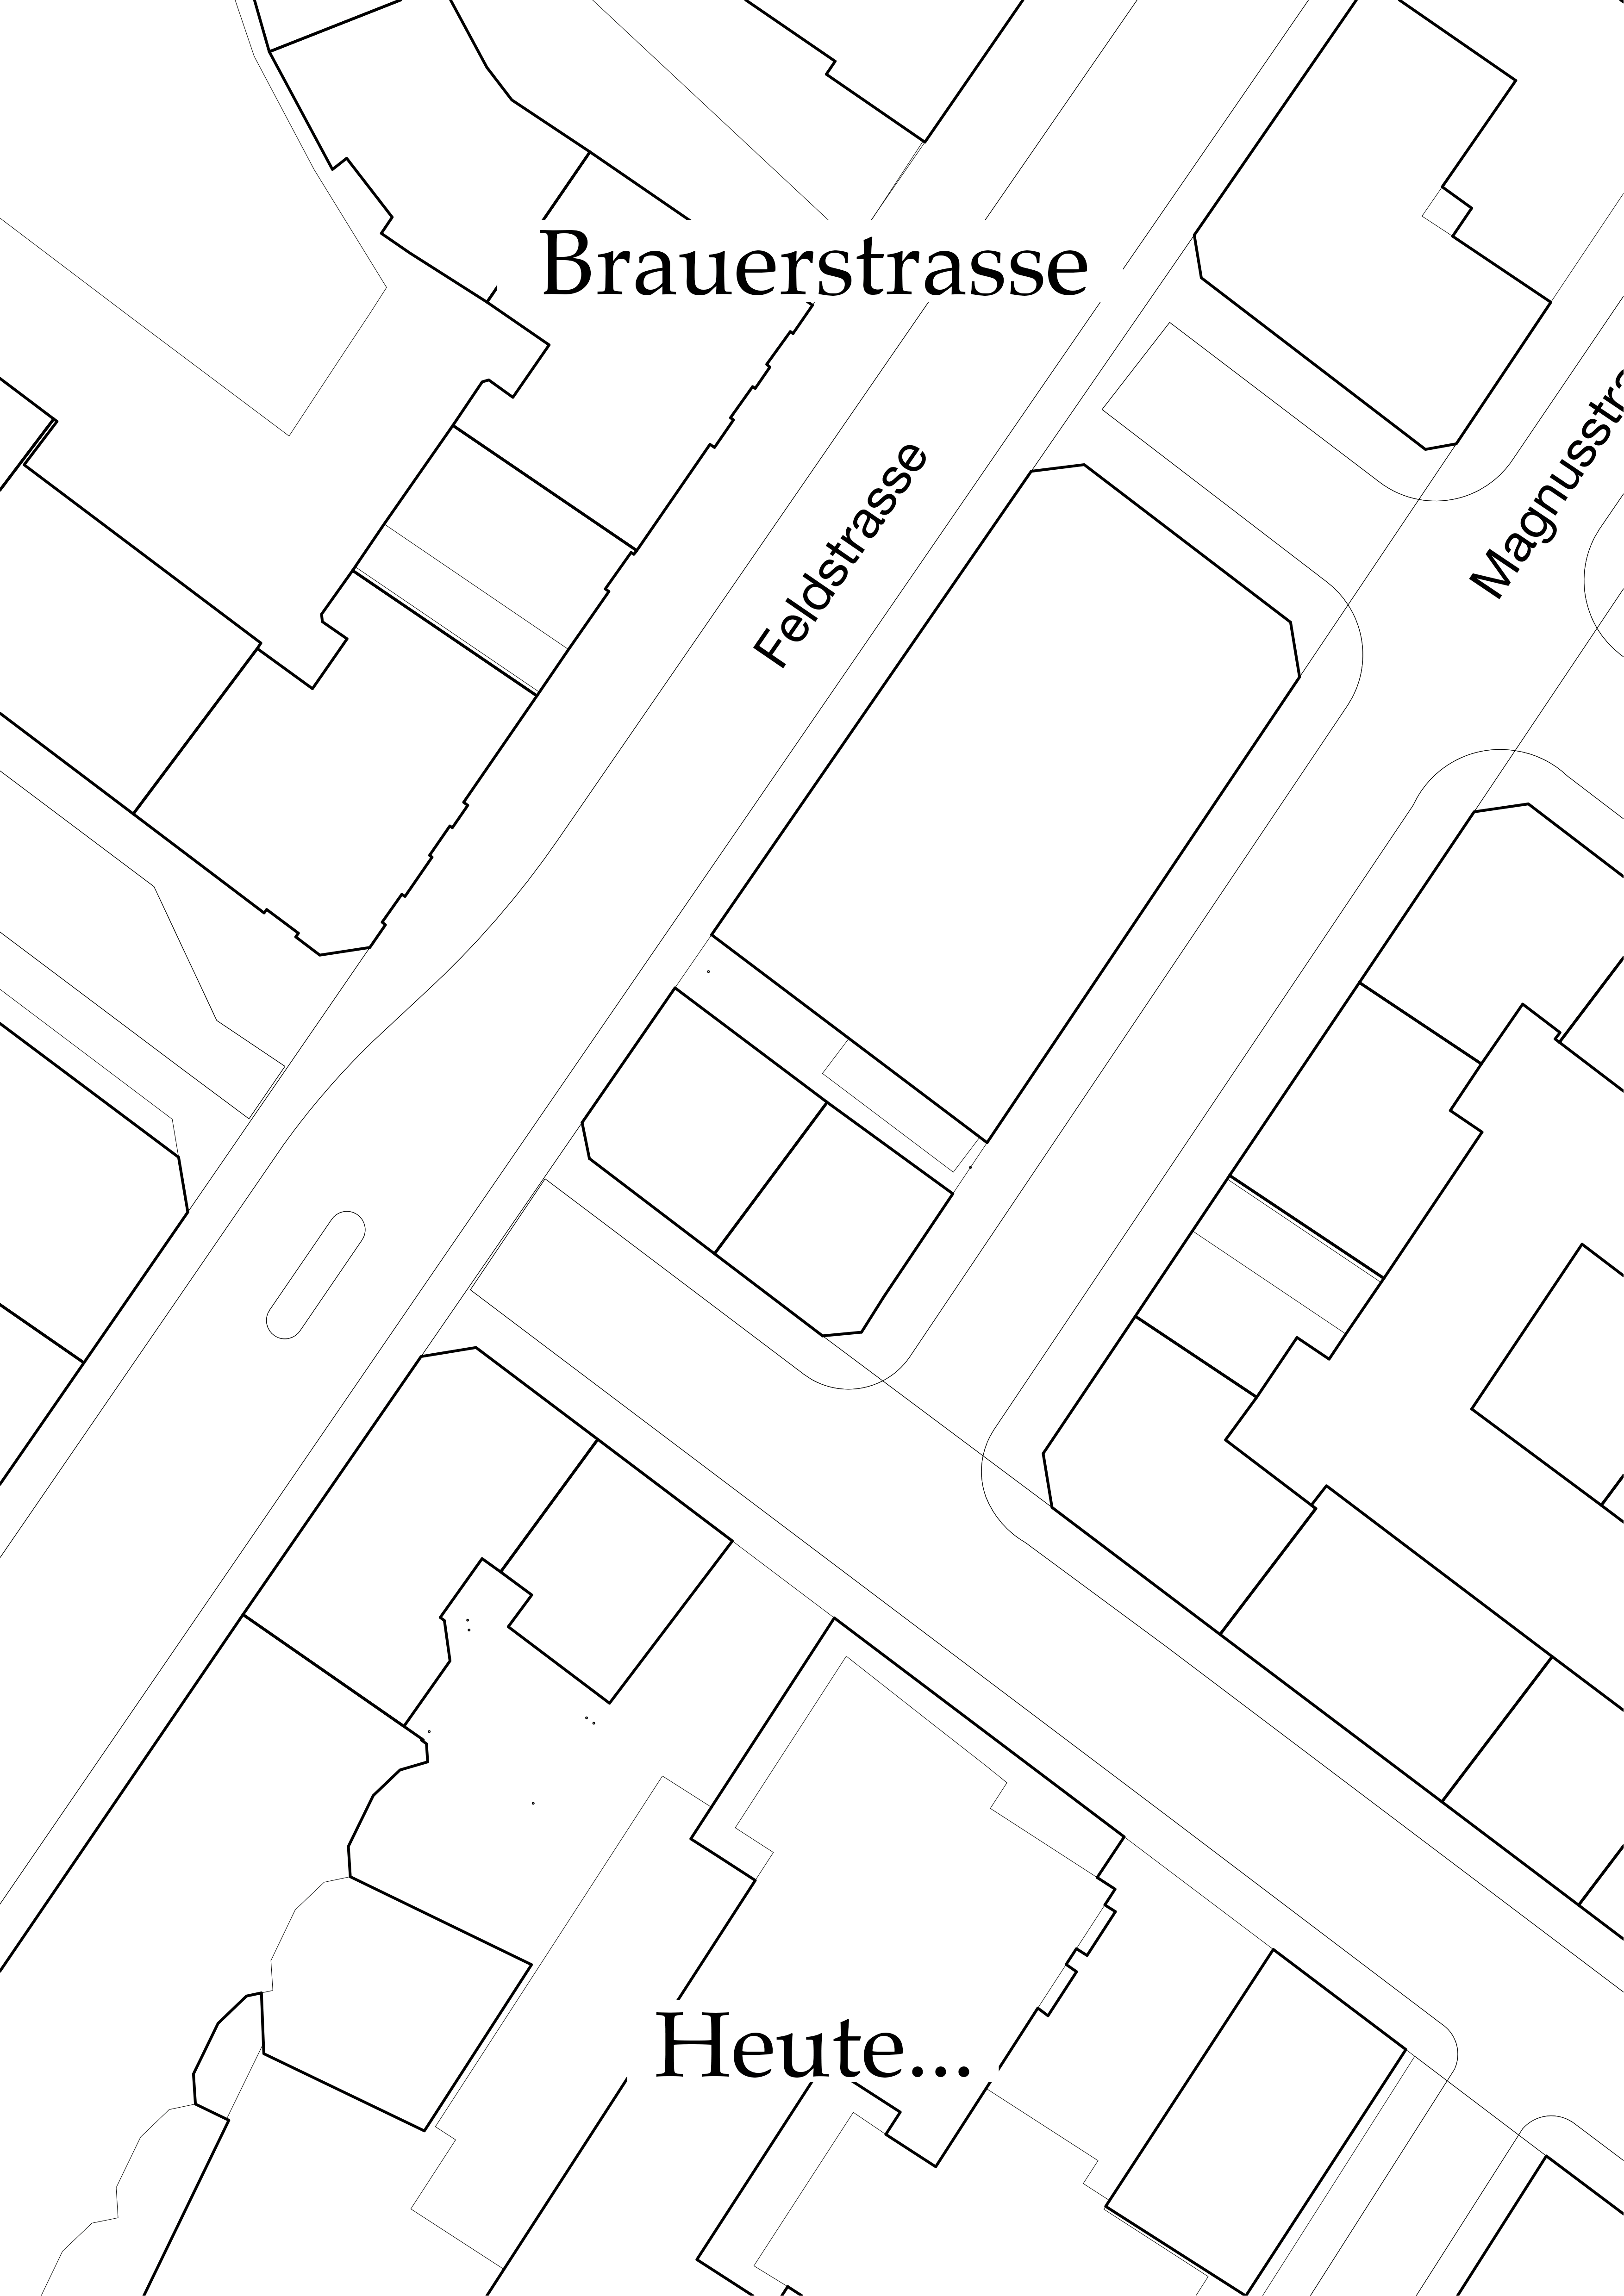 Plan Brauerstrasse